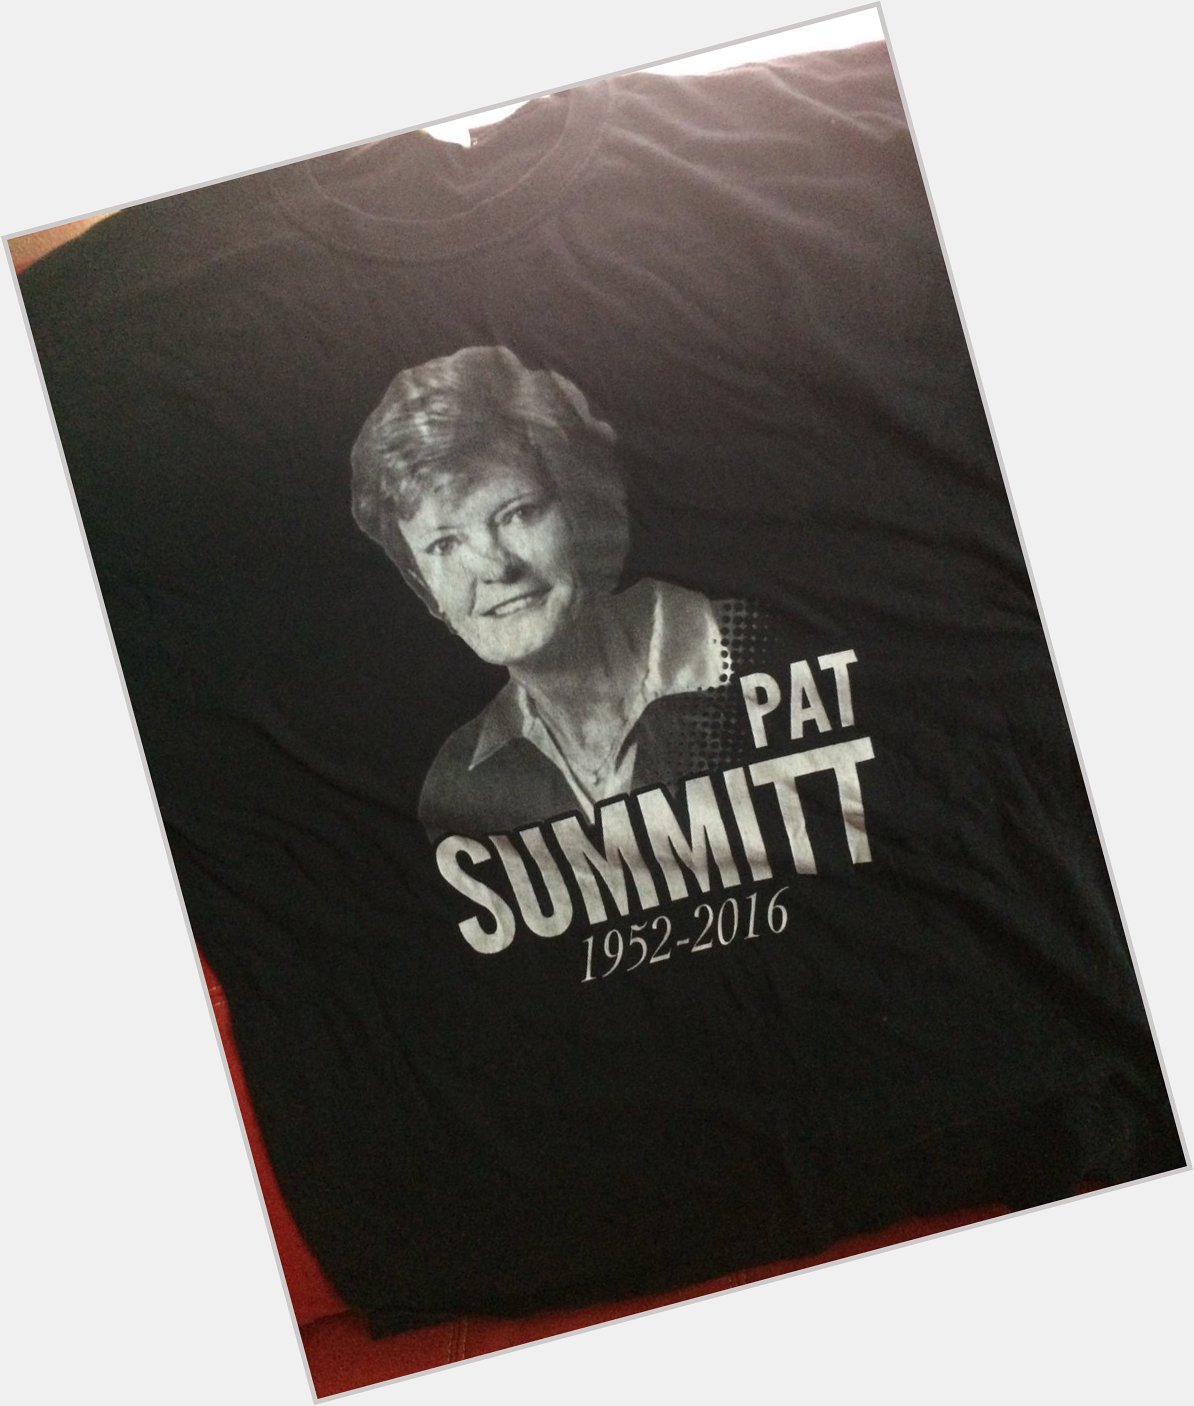 Happy birthday Coach Pat Summitt RIP 